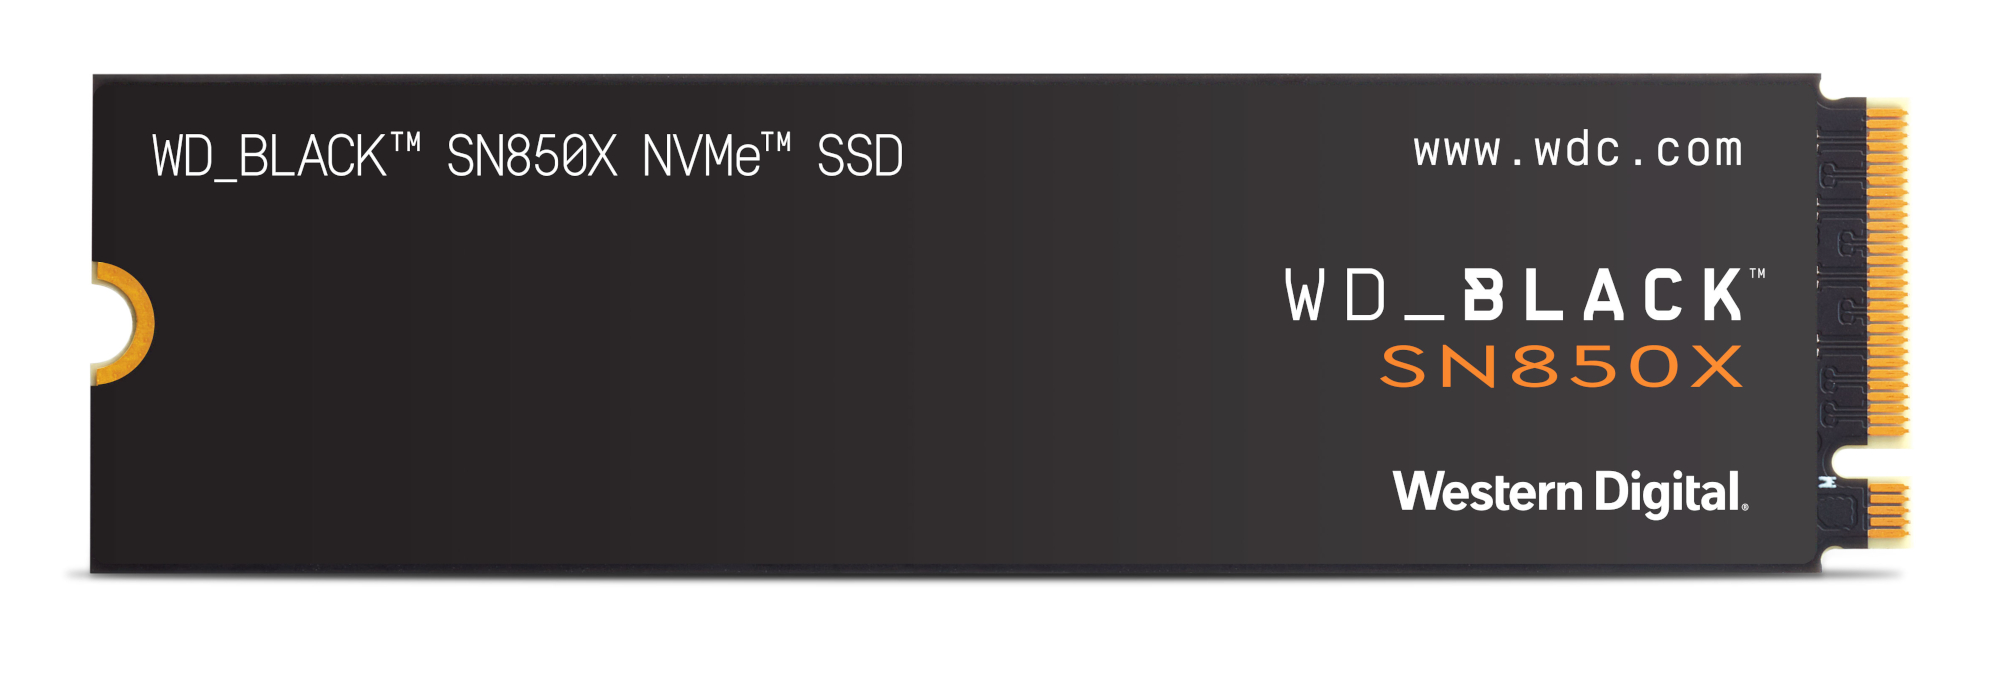 WD Black SN850X - Bedste PCIe 4.0 SSD